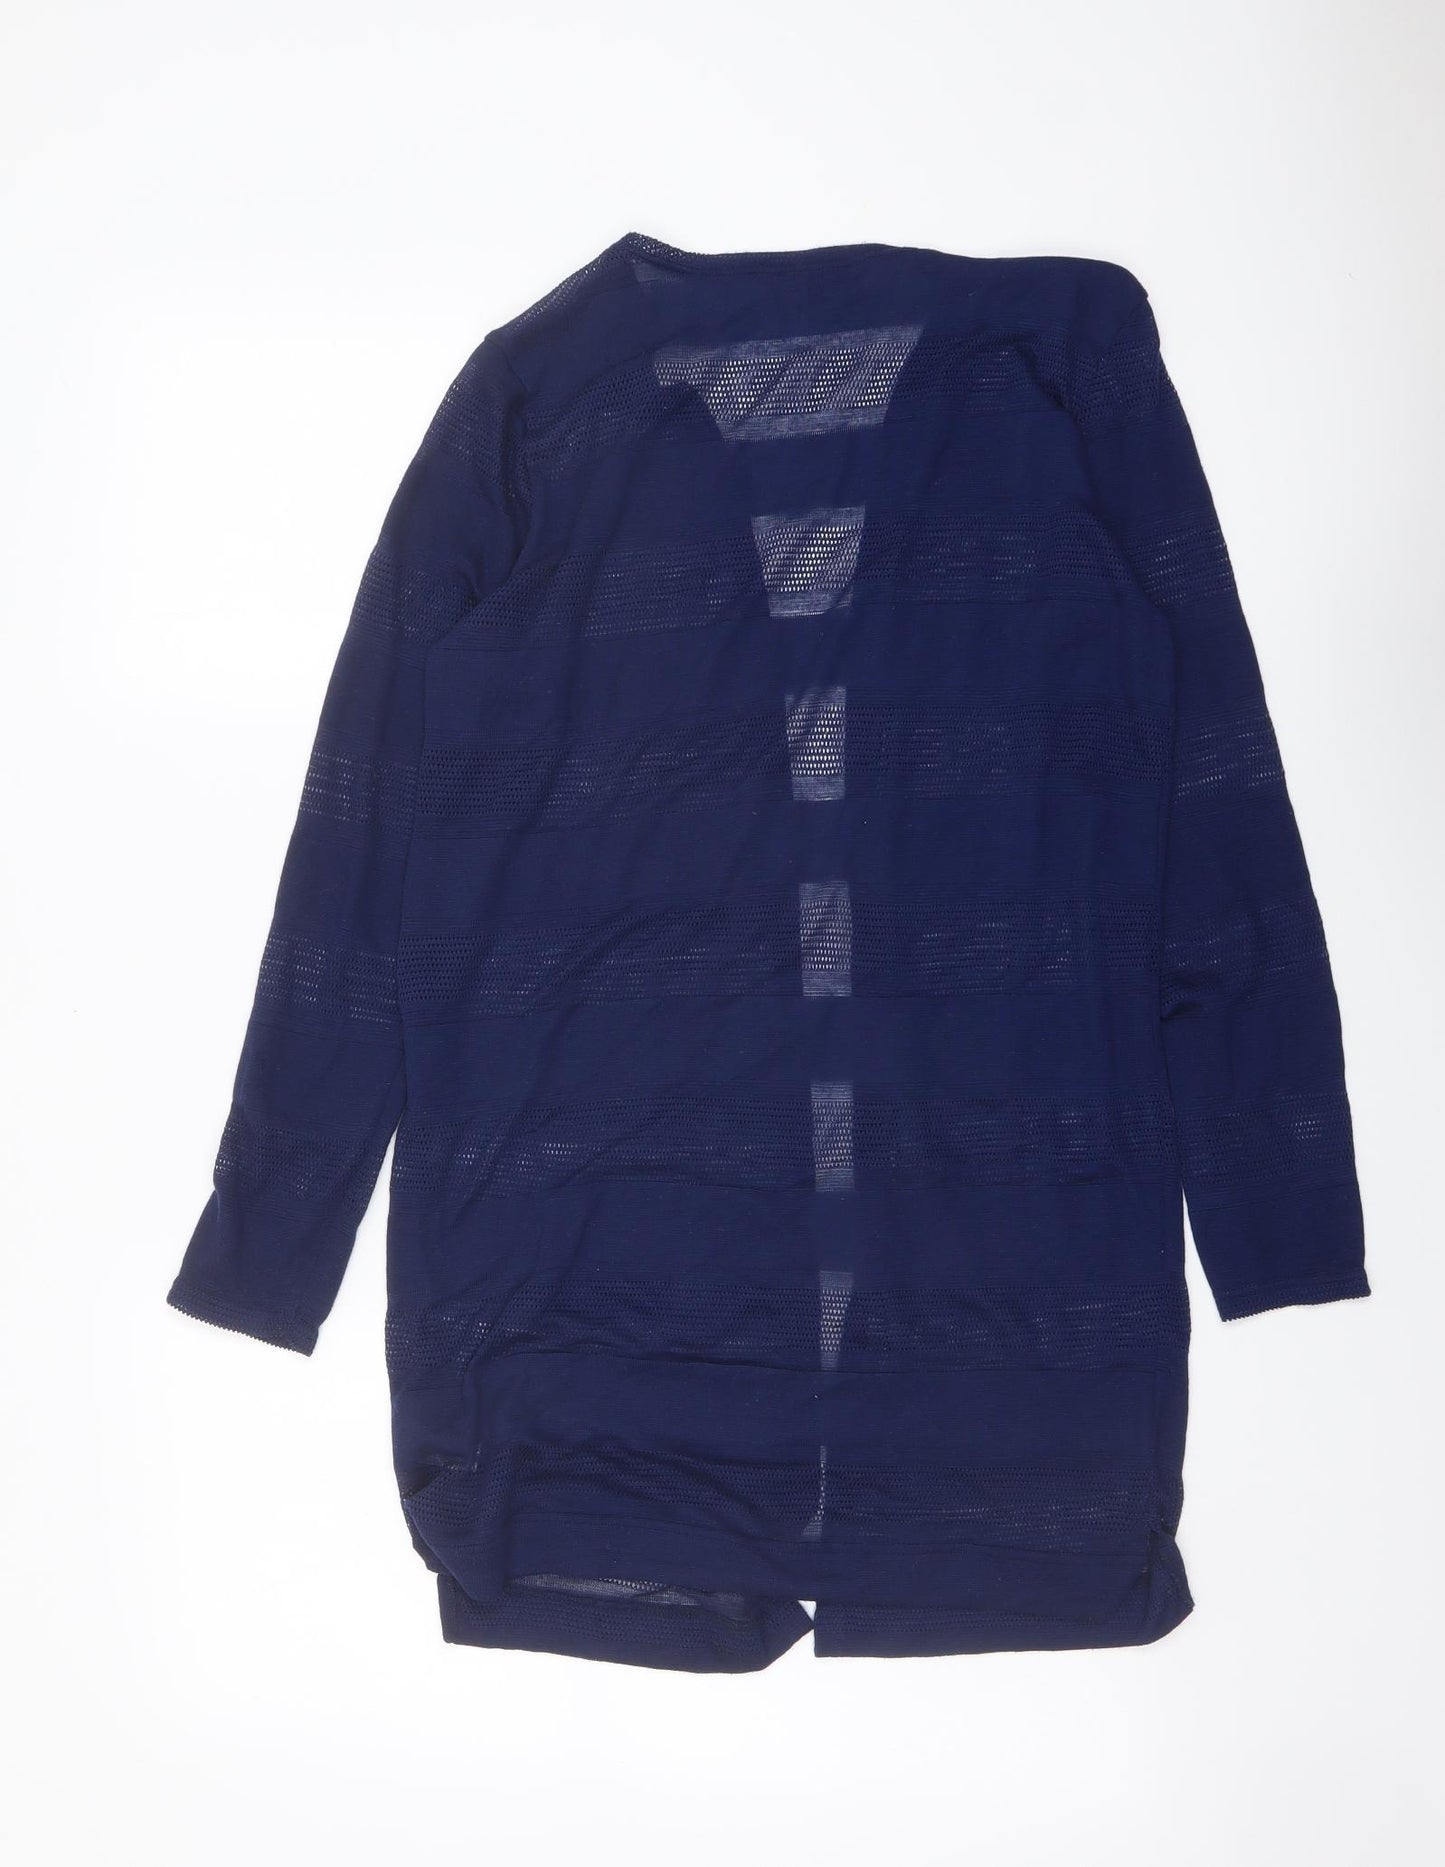 NEXT Womens Blue V-Neck Striped Polyester Cardigan Jumper Size 10